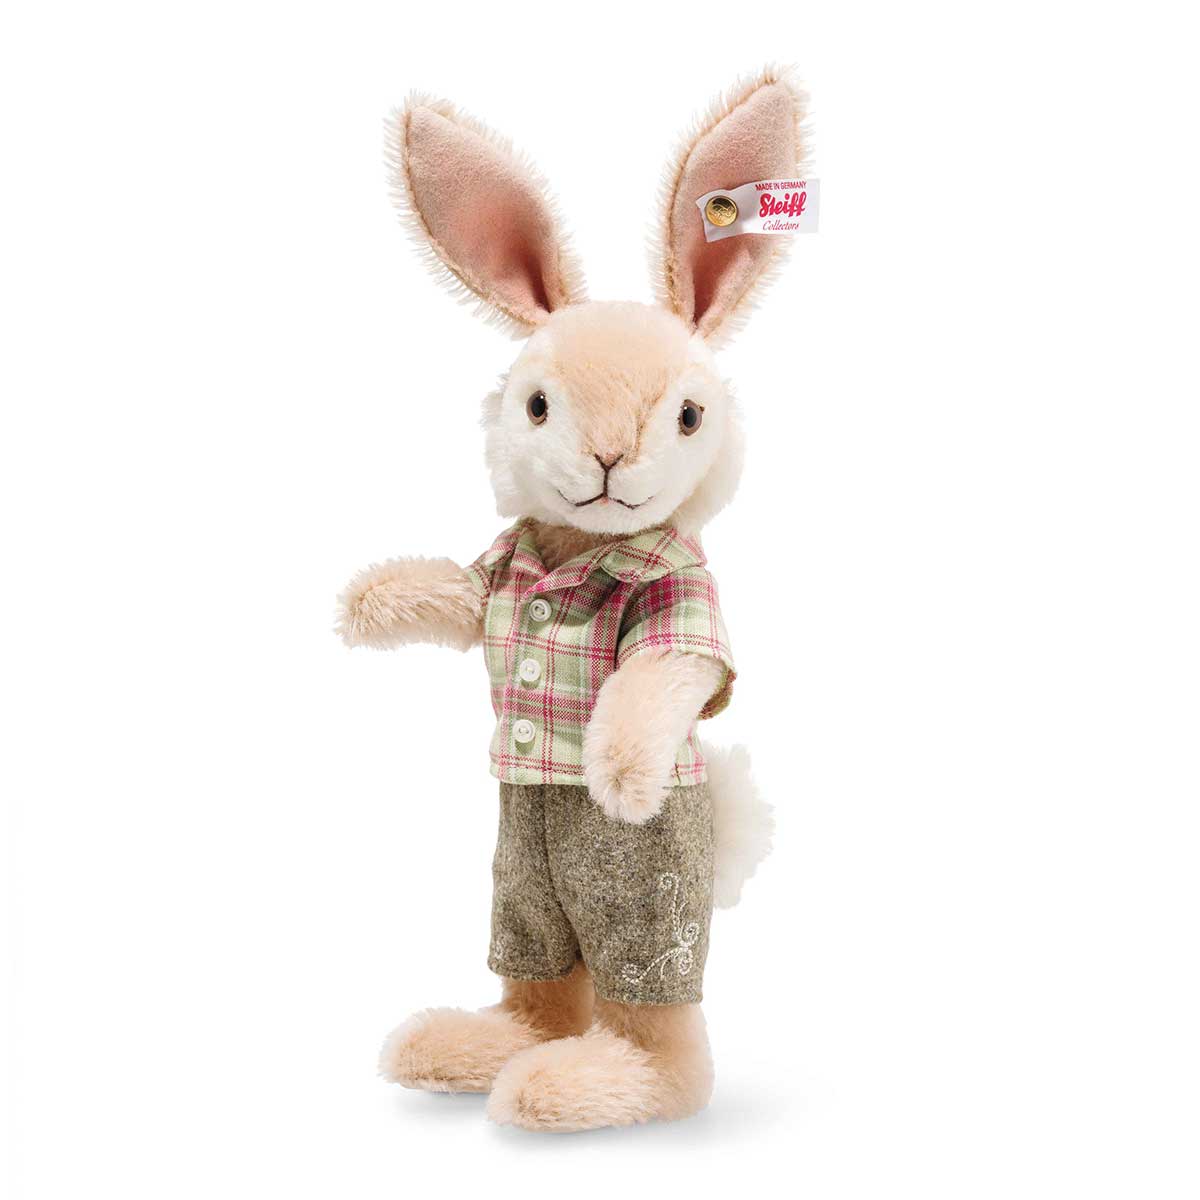 Steiff Limited Edition Rabbit Boy